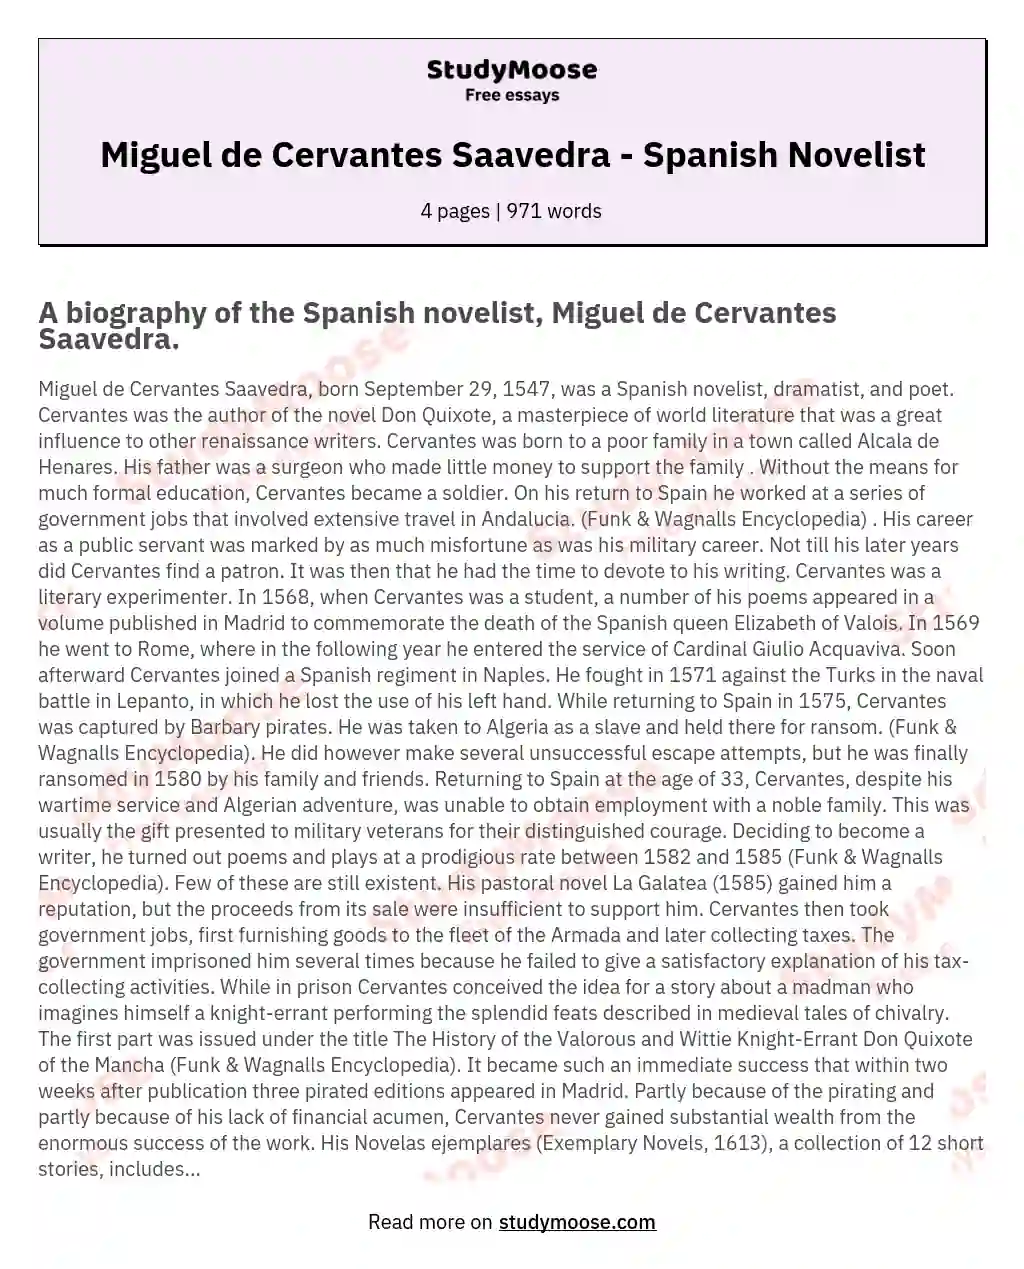 Miguel de Cervantes Saavedra - Spanish Novelist essay